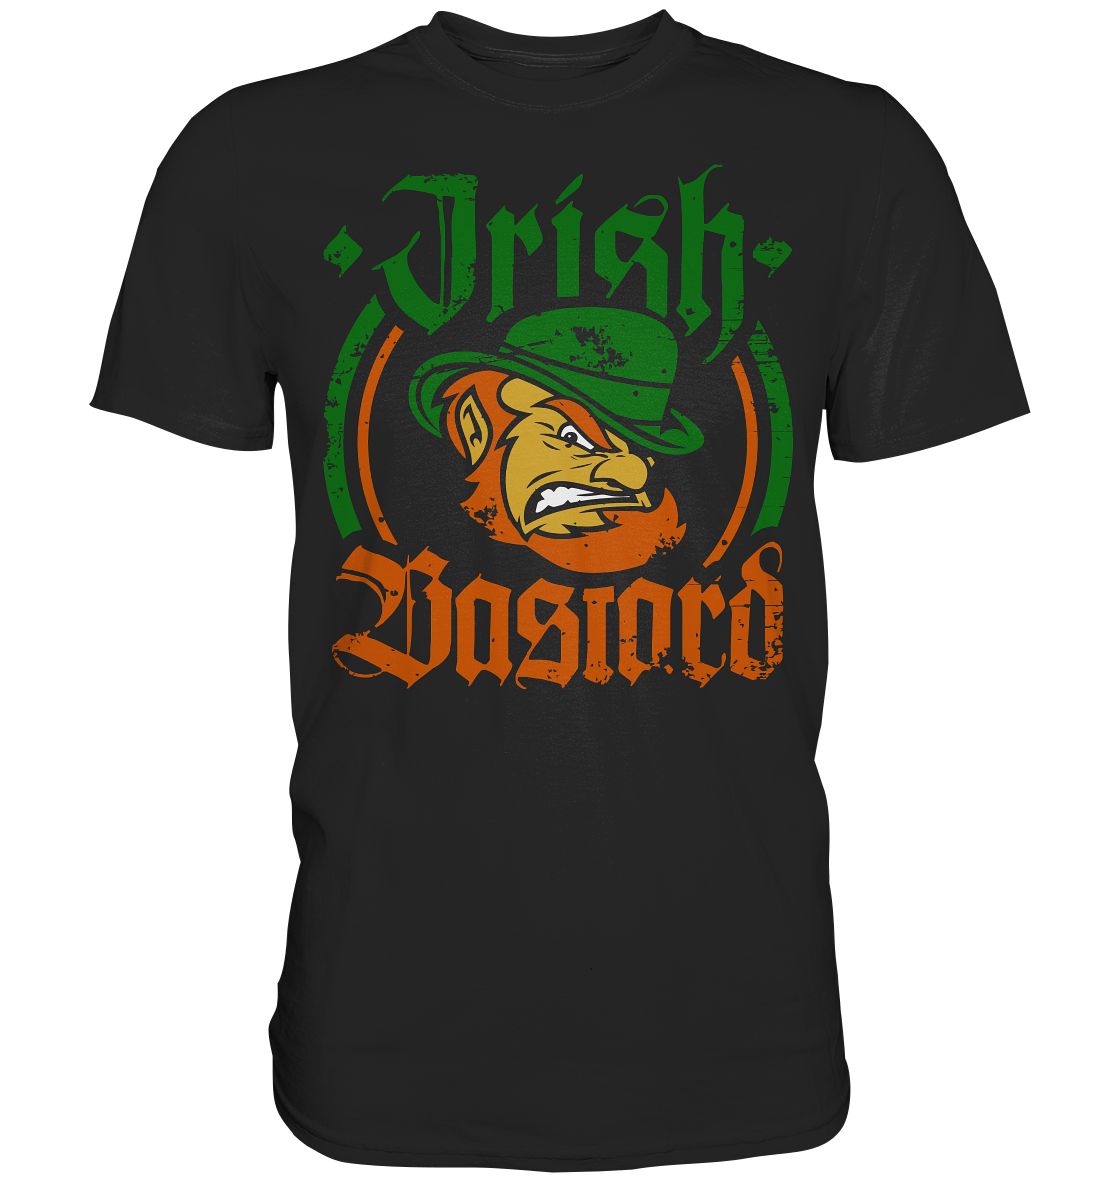 "Irish Bastard" - Premium Shirt